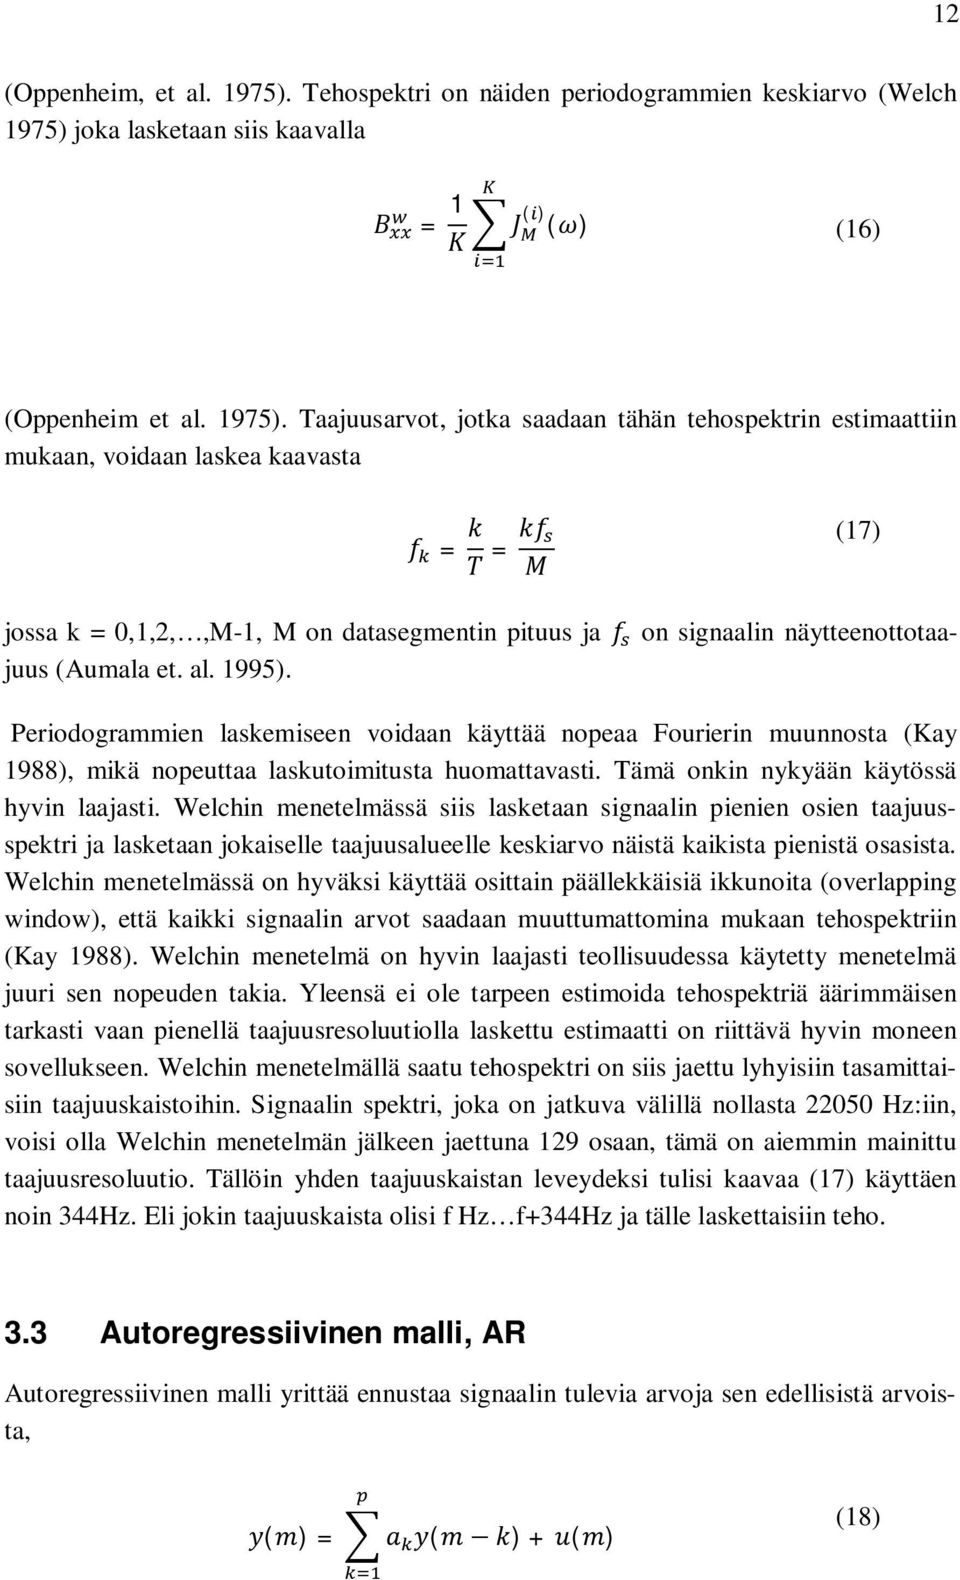 joka lasketaan siis kaavalla = 1 () () (16) (Oppenheim et al. 1975).